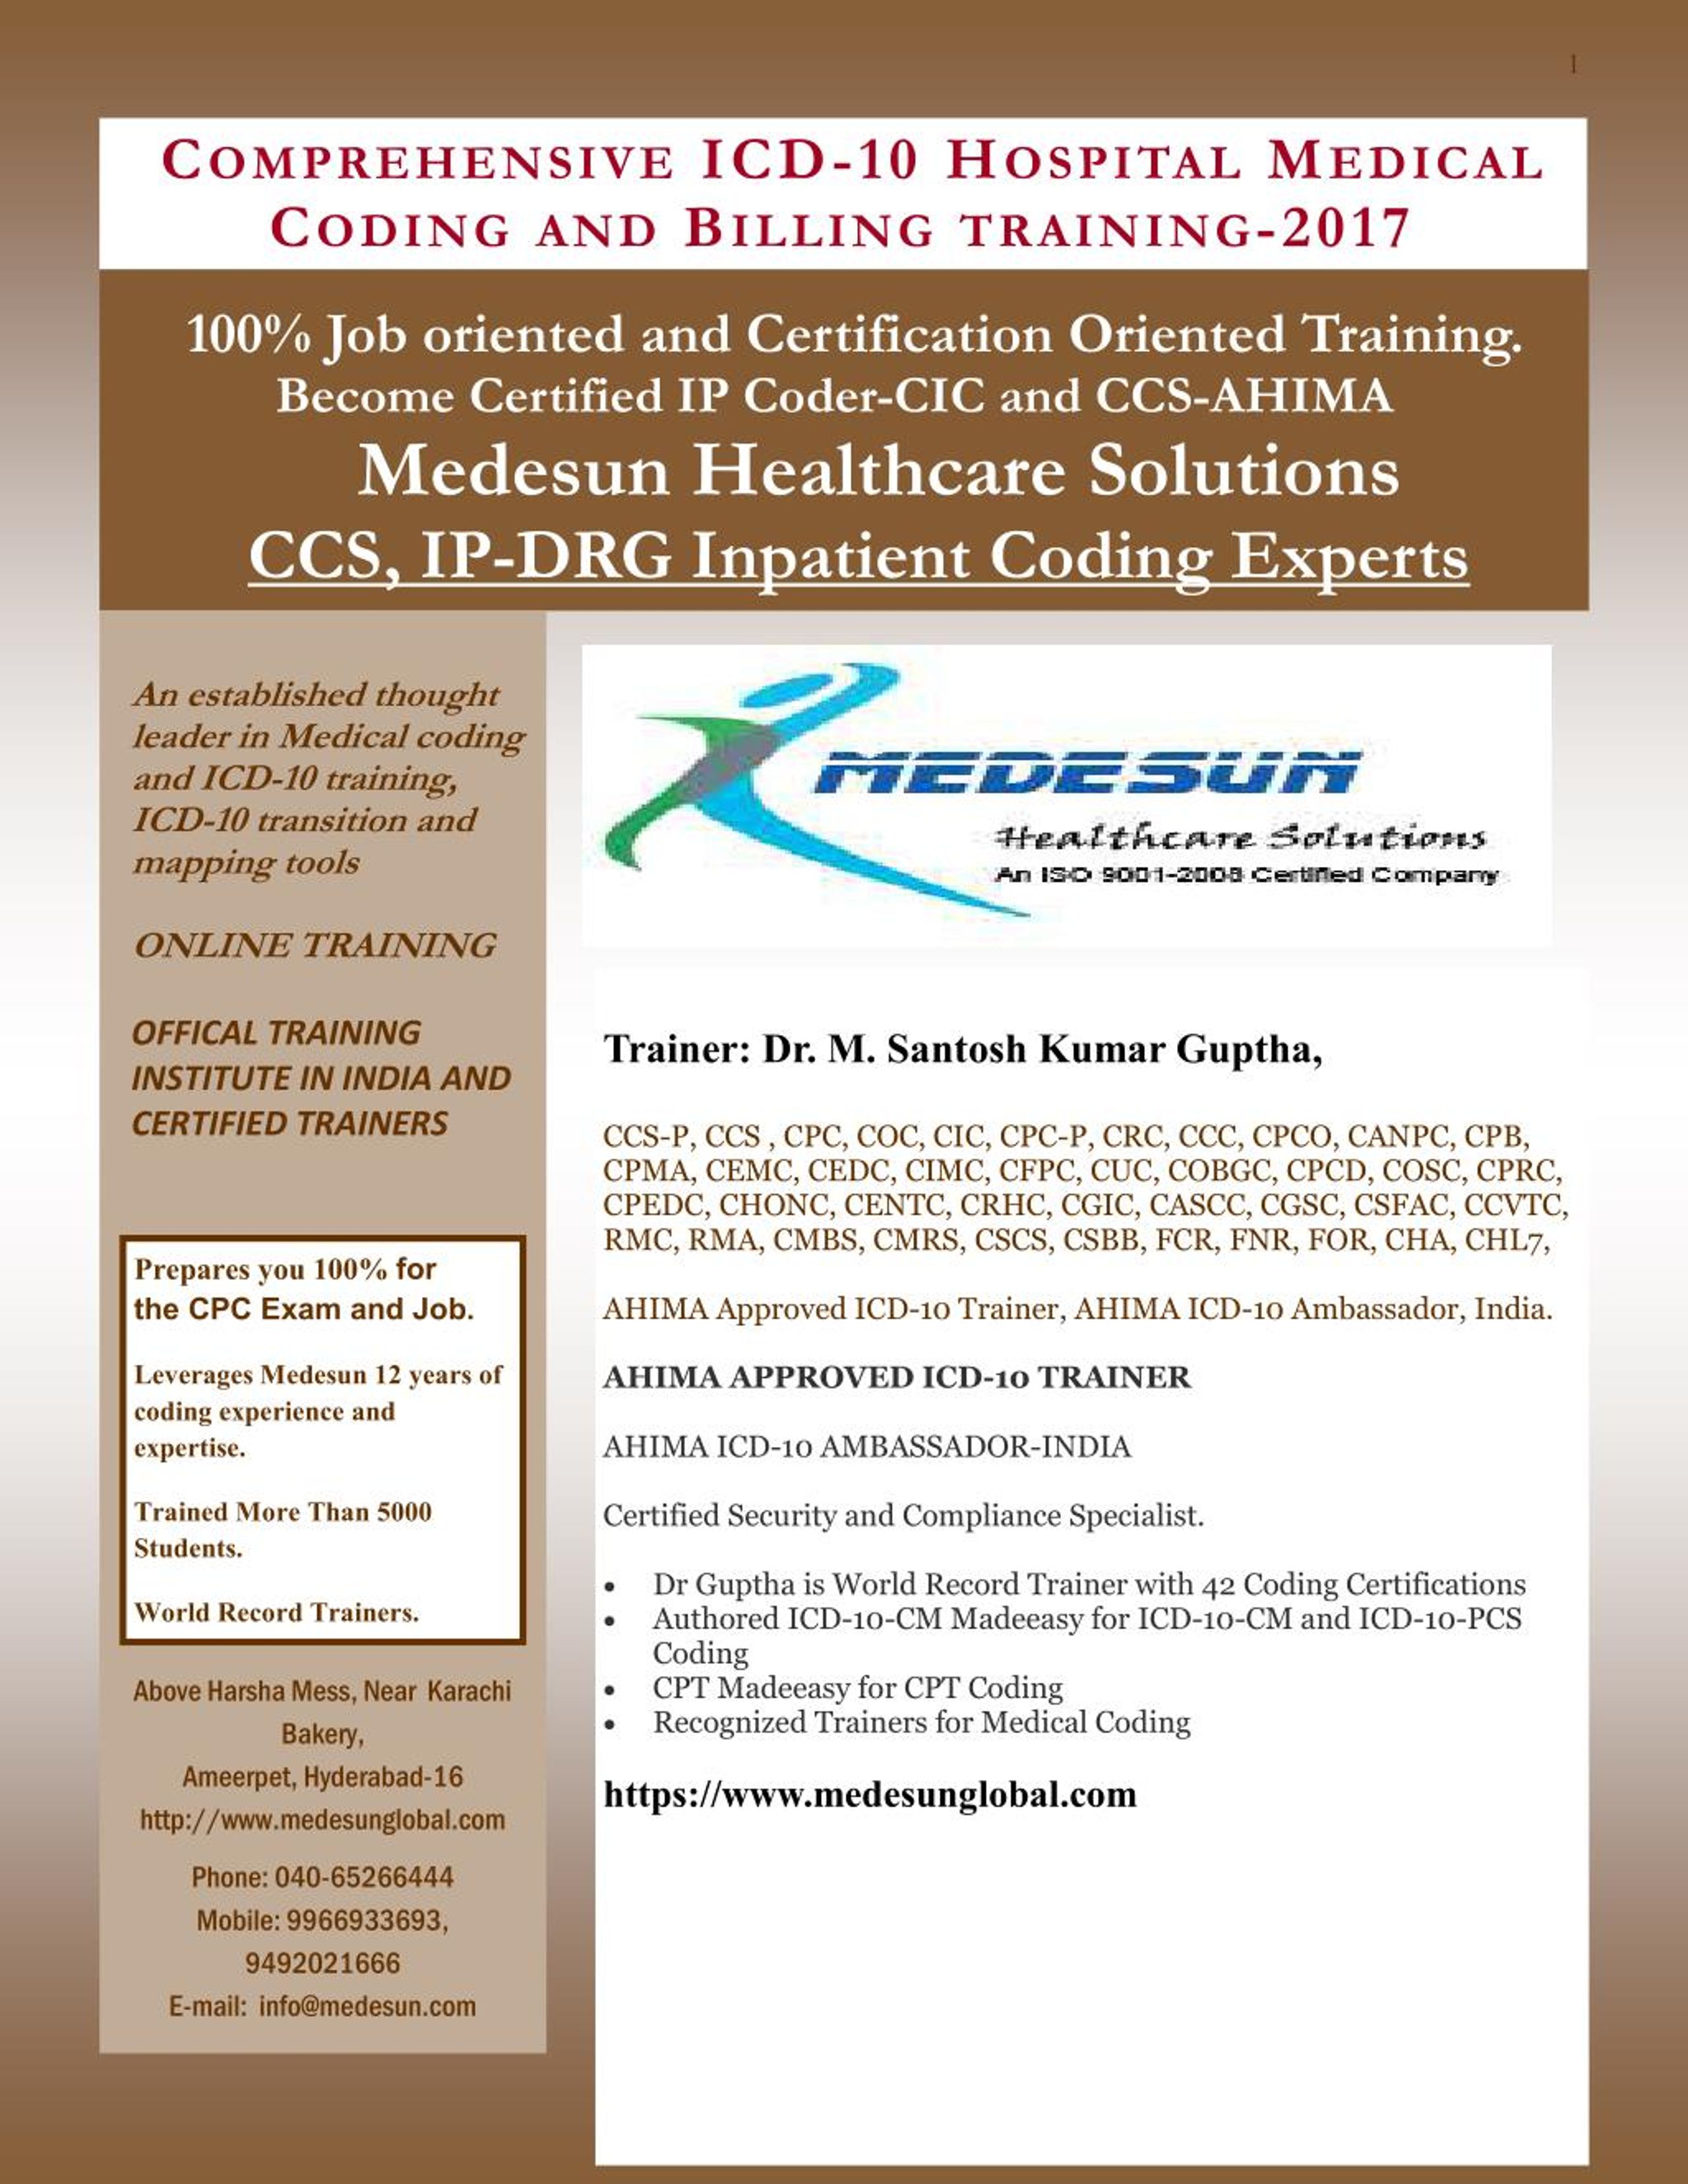 medical coding certification